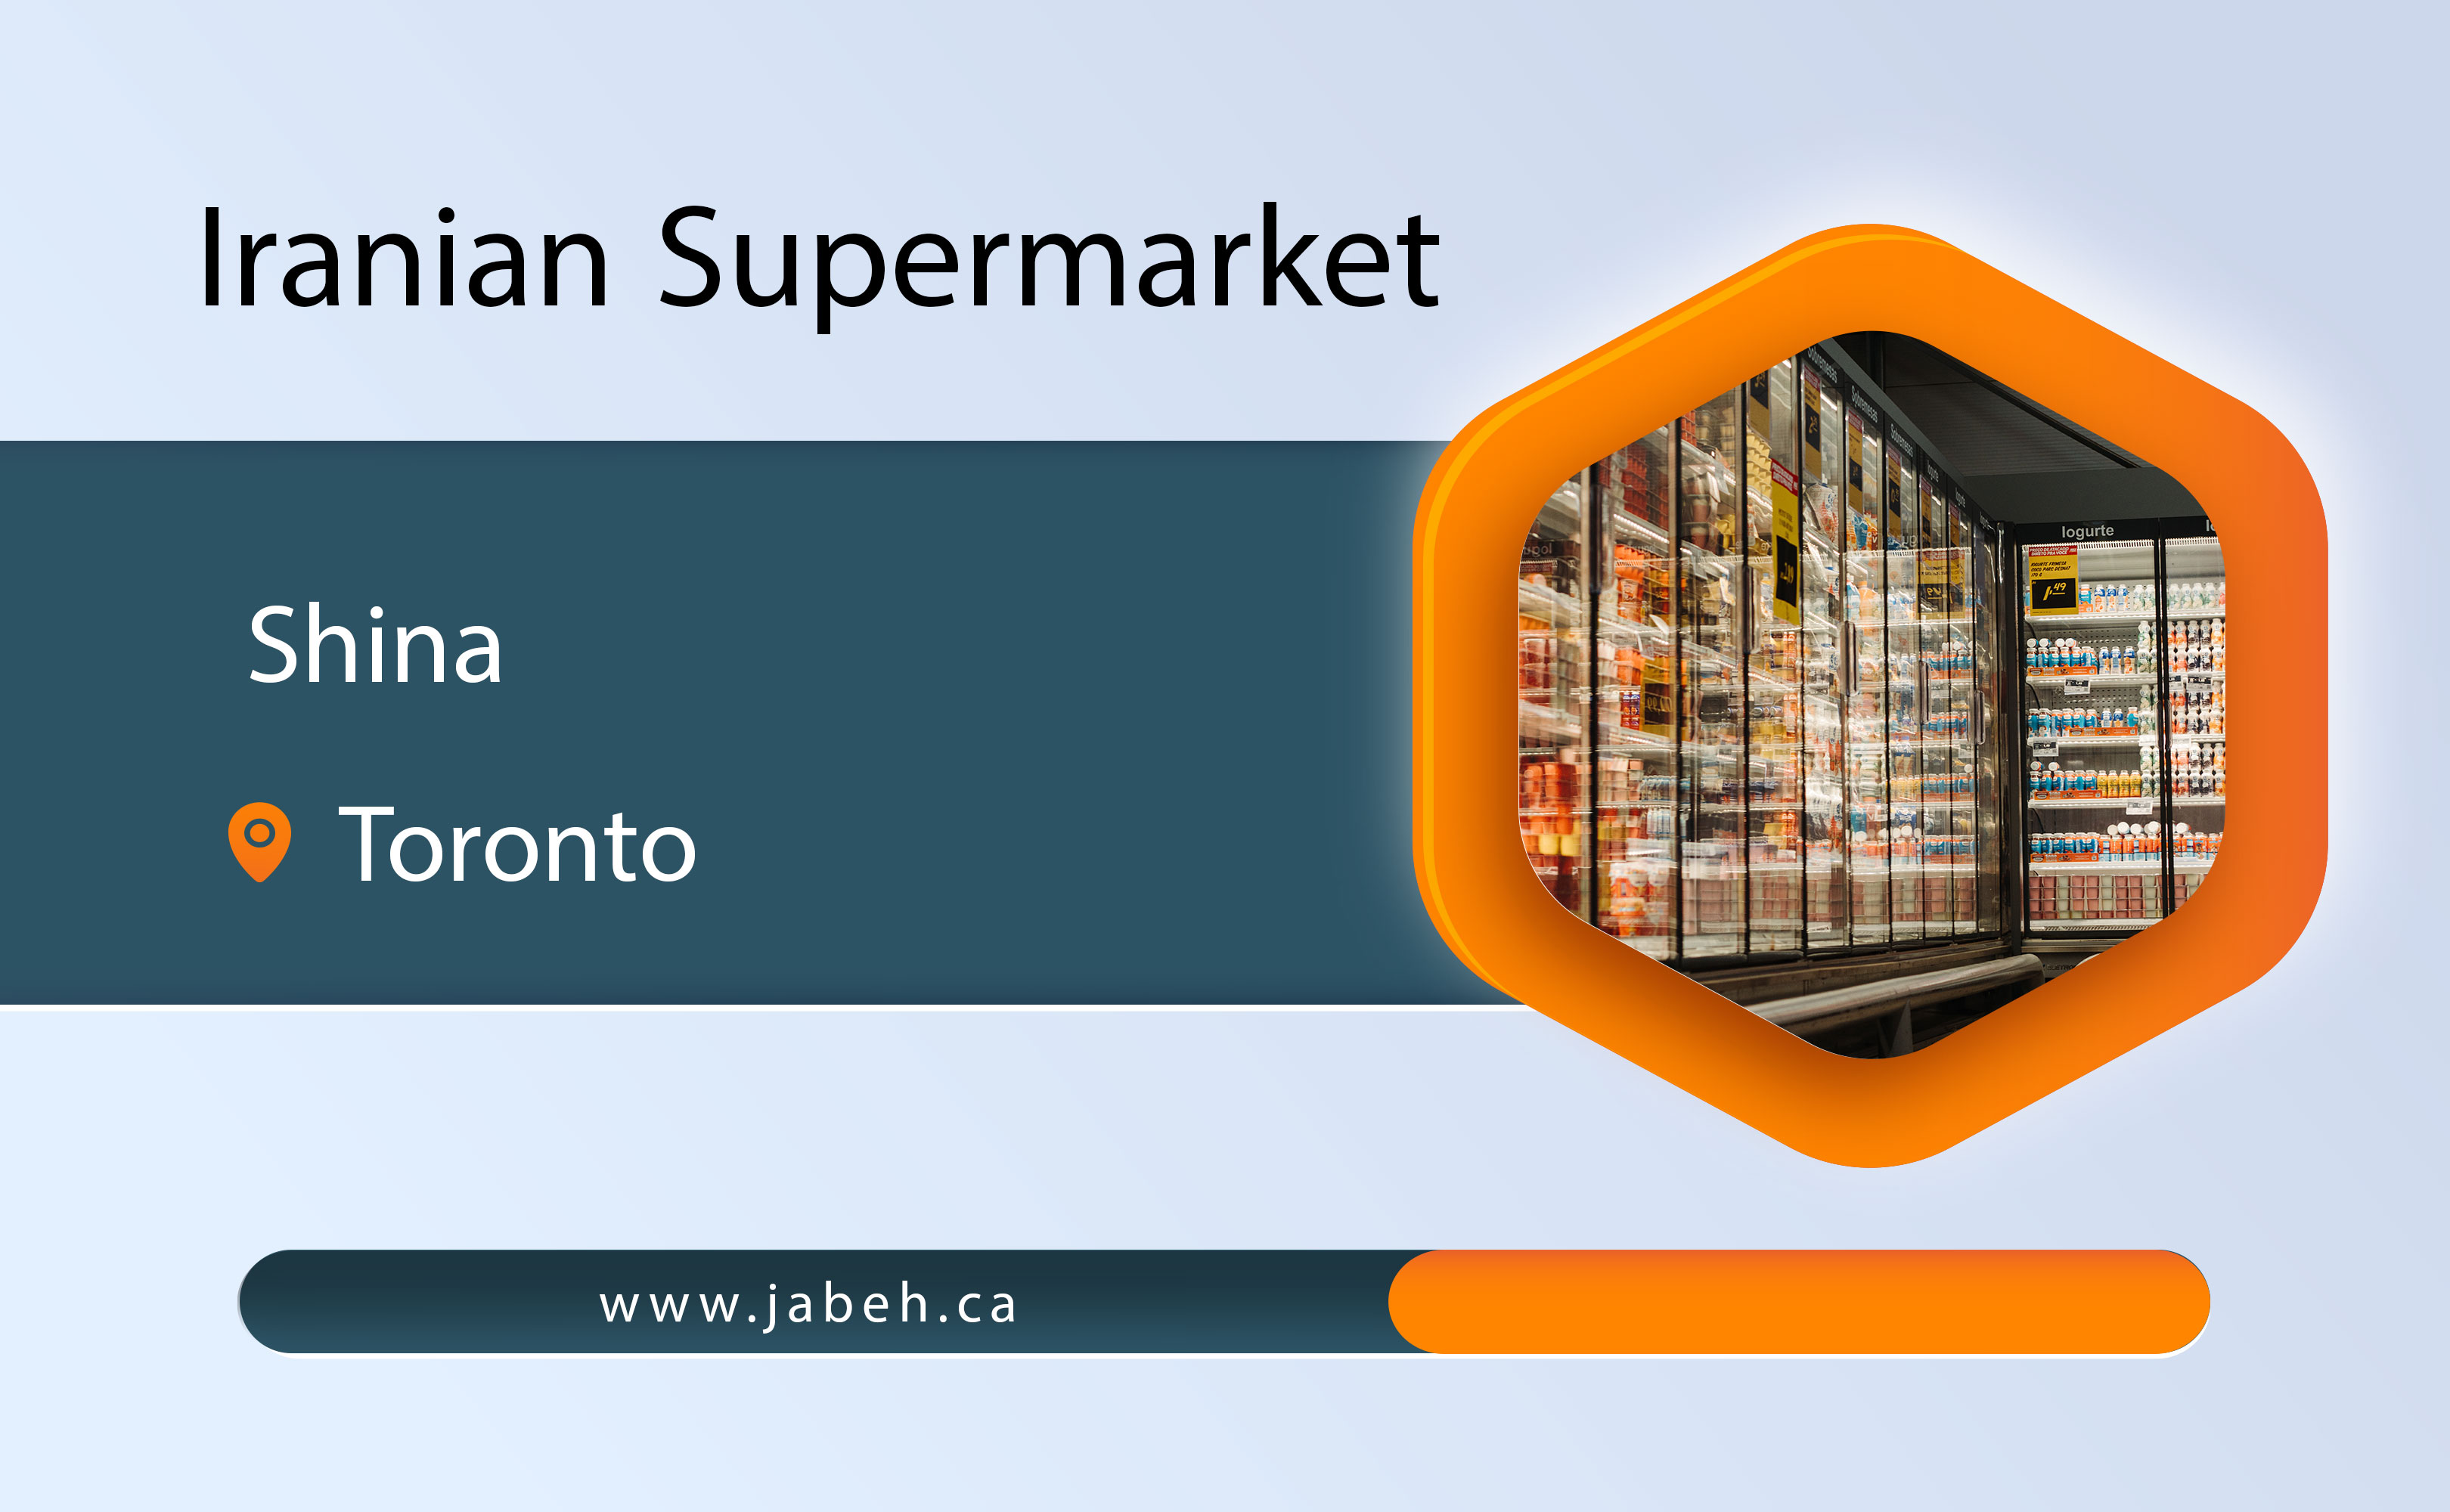 Sheena Iranian supermarket in Toronto